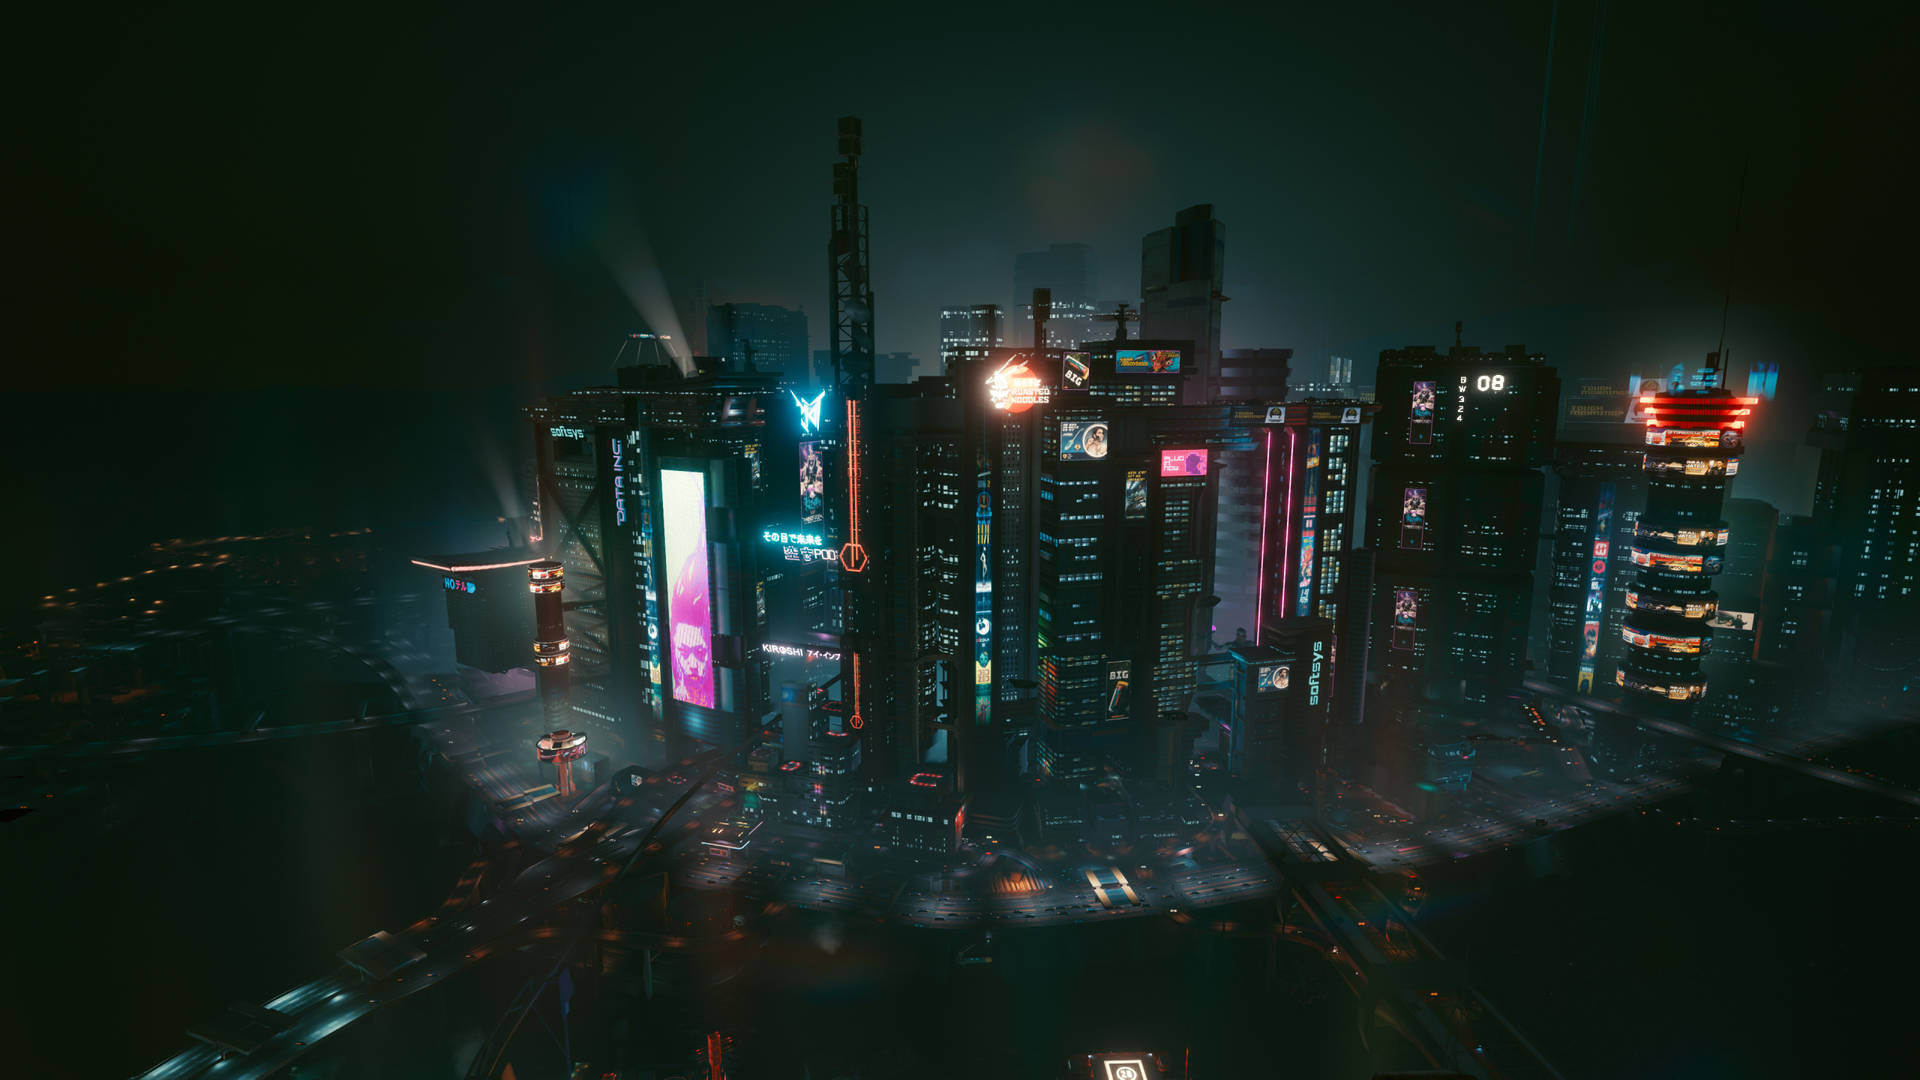 "Vibrant Cyberpunk City At Night" Wallpaper